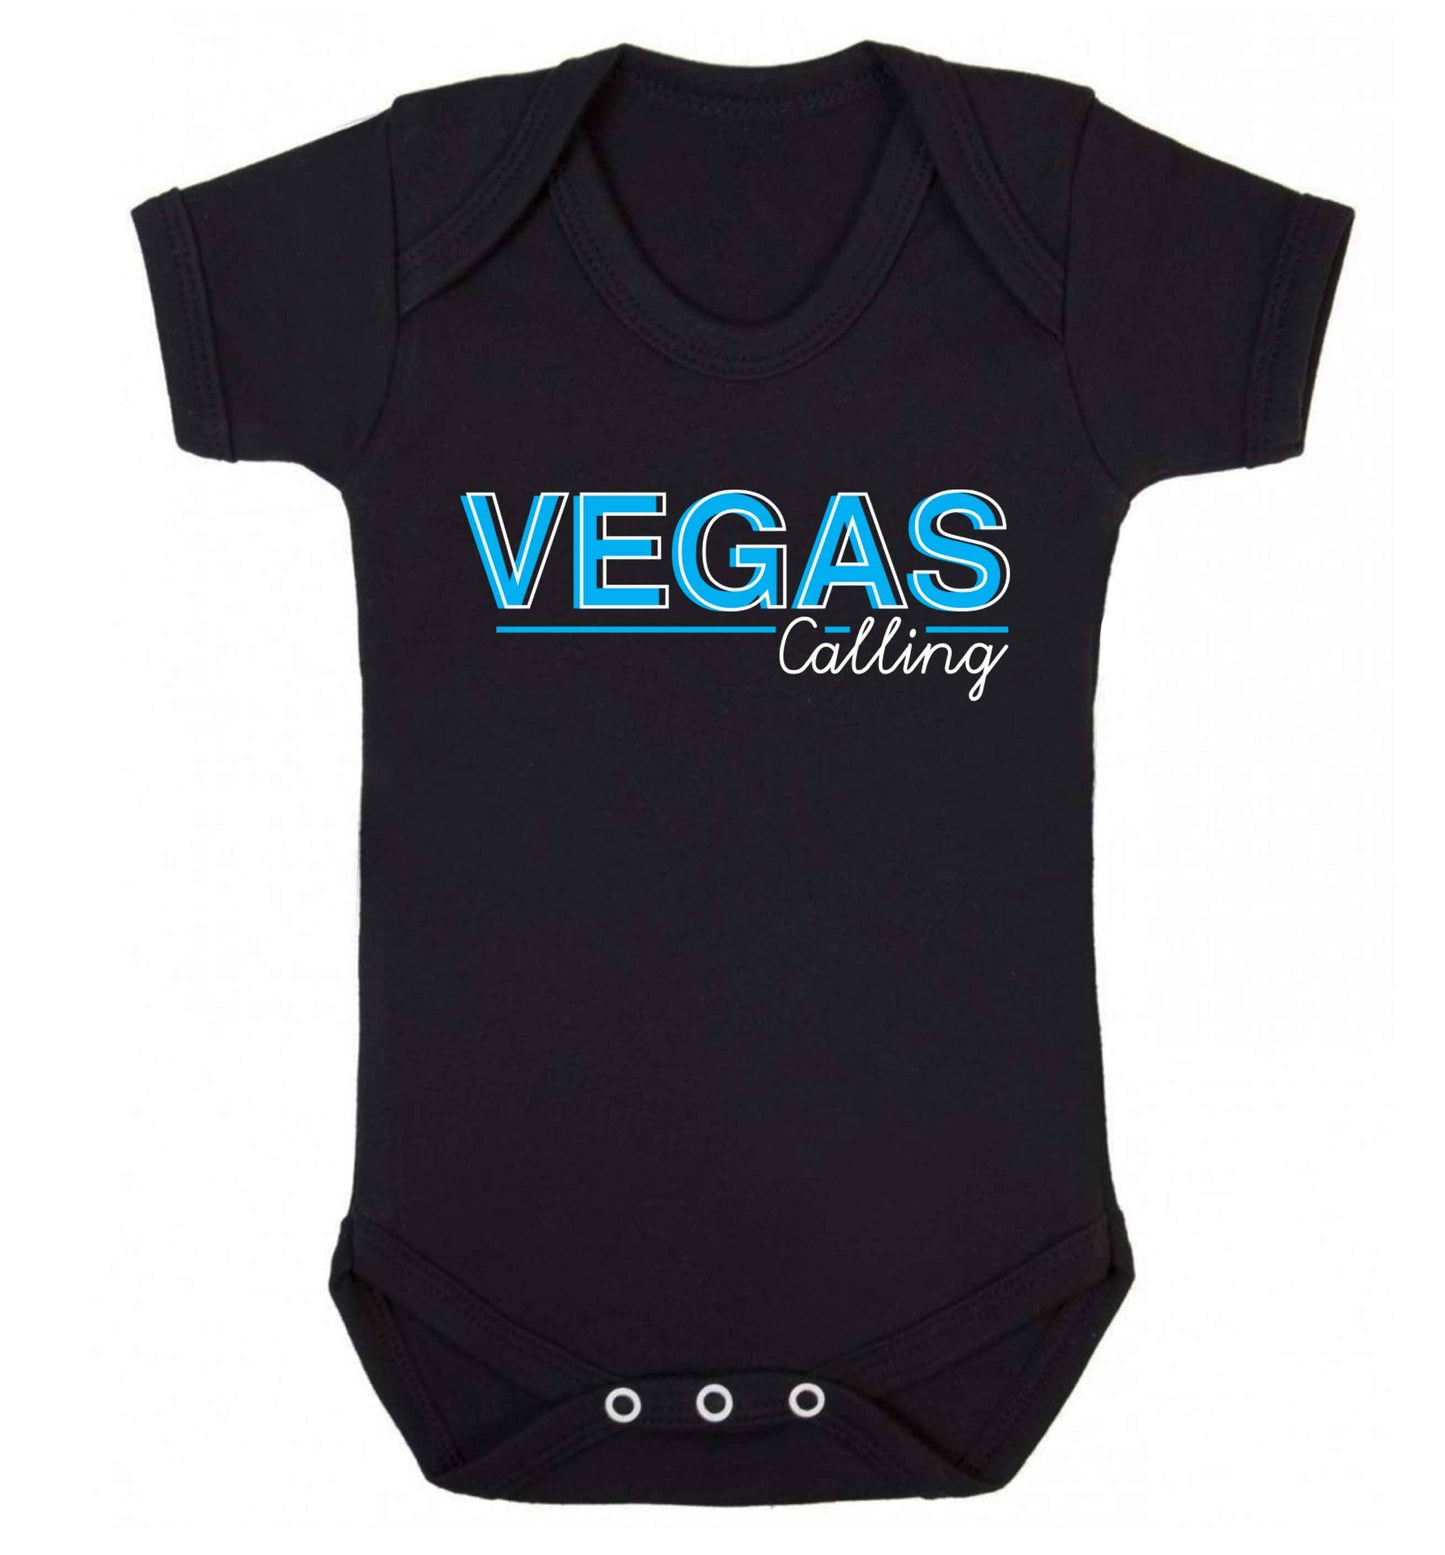 Vegas calling Baby Vest black 18-24 months